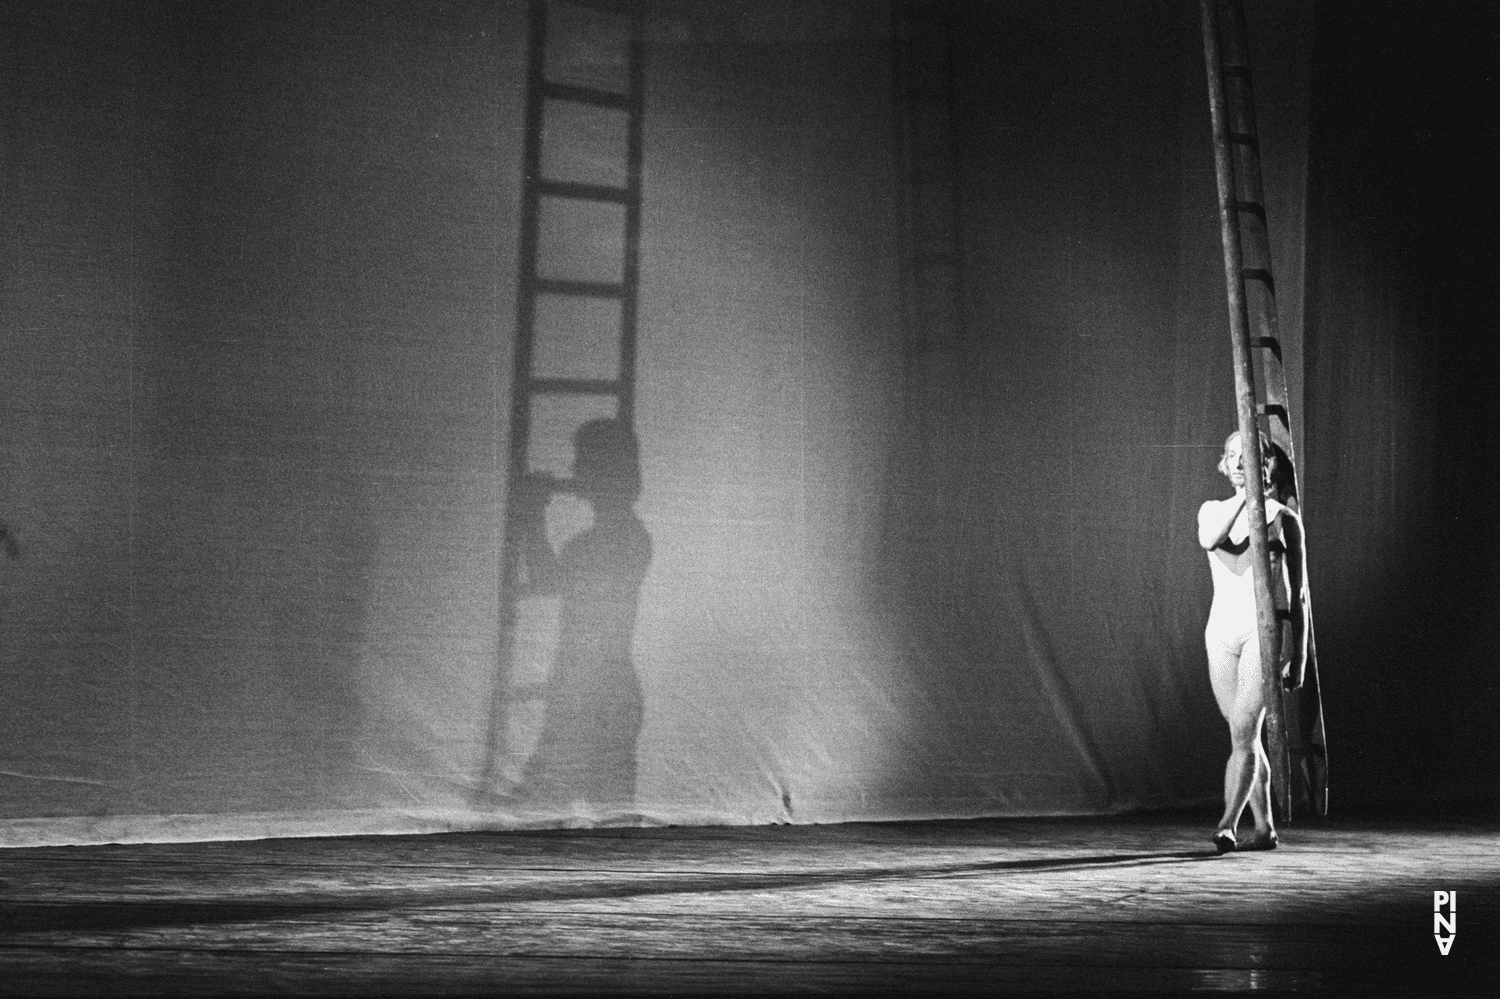 Dominique Mercy dans « Iphigenie auf Tauris » de Pina Bausch à l'Opernhaus Wuppertal, saison 1973/74